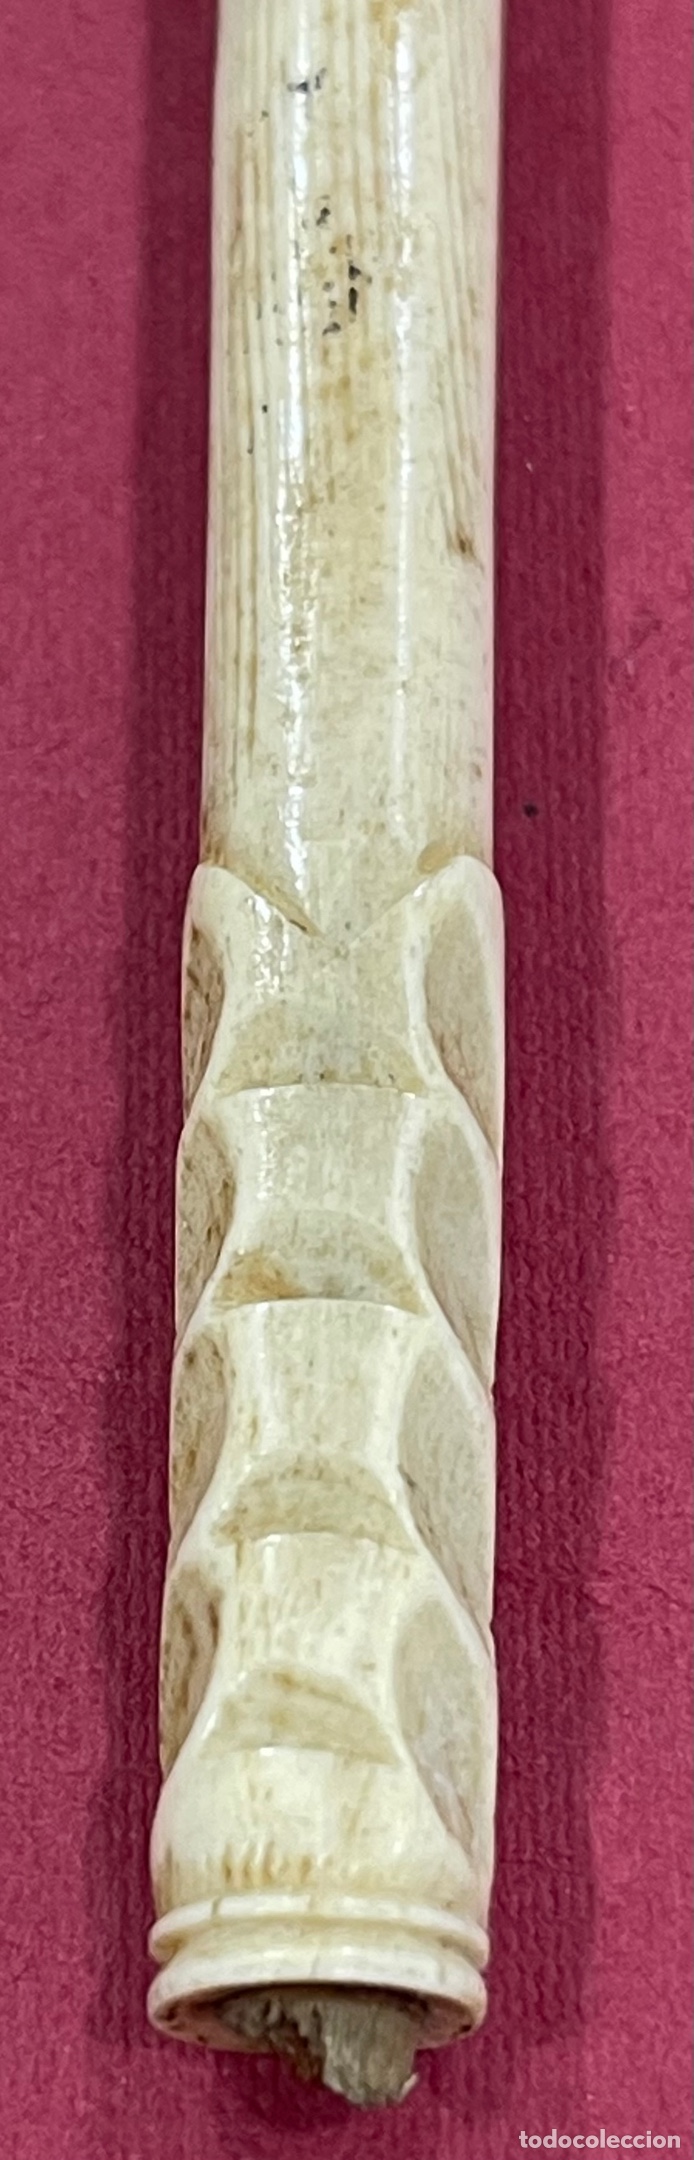 Antigüedades: Antiguo mango para bastón de paseo, en hueso tallado. - Foto 3 - 271583598